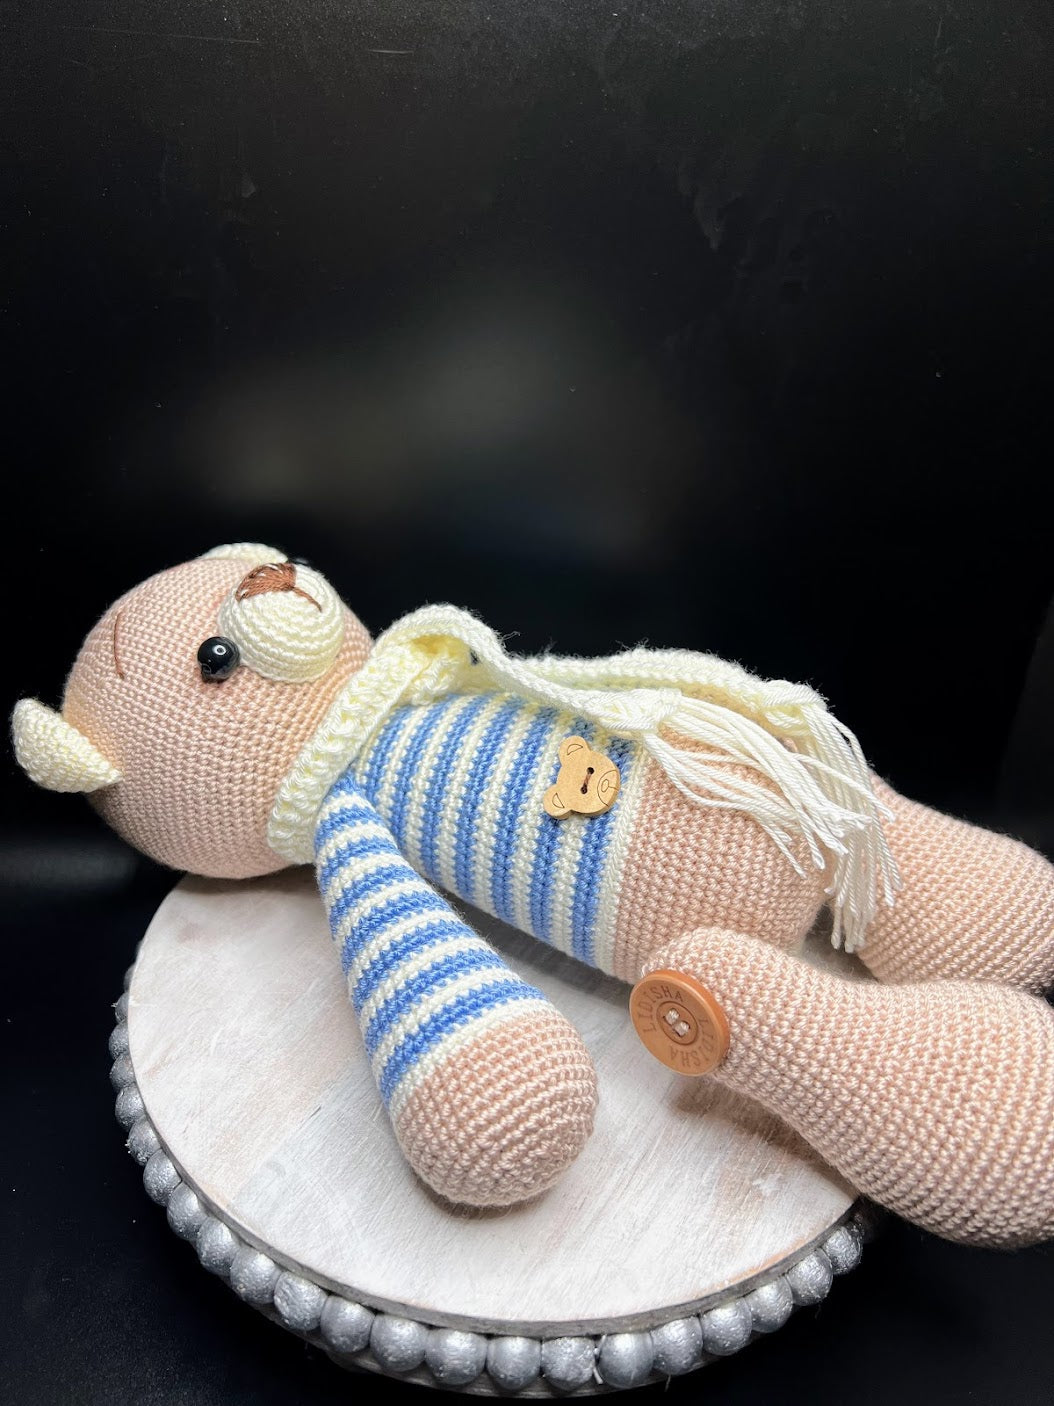 Stuffed Bear with Scarf - Crochet Knitted Amigurumi Toy